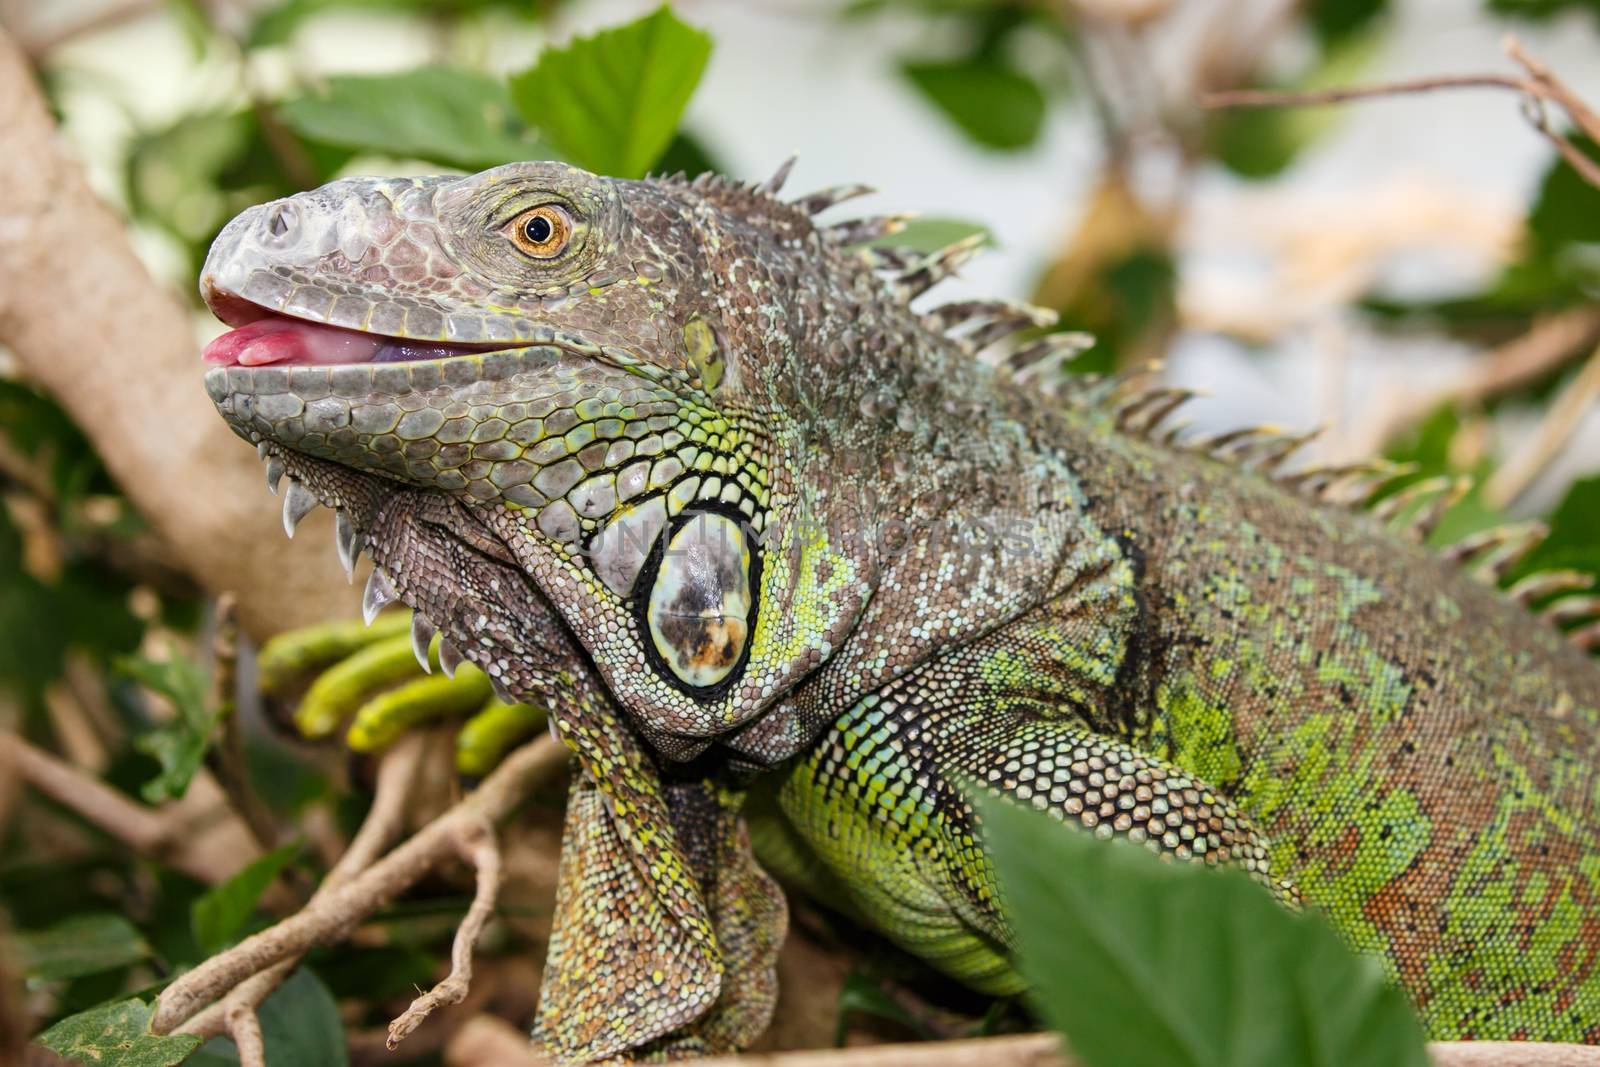 Green Iguana Reptile by fouroaks